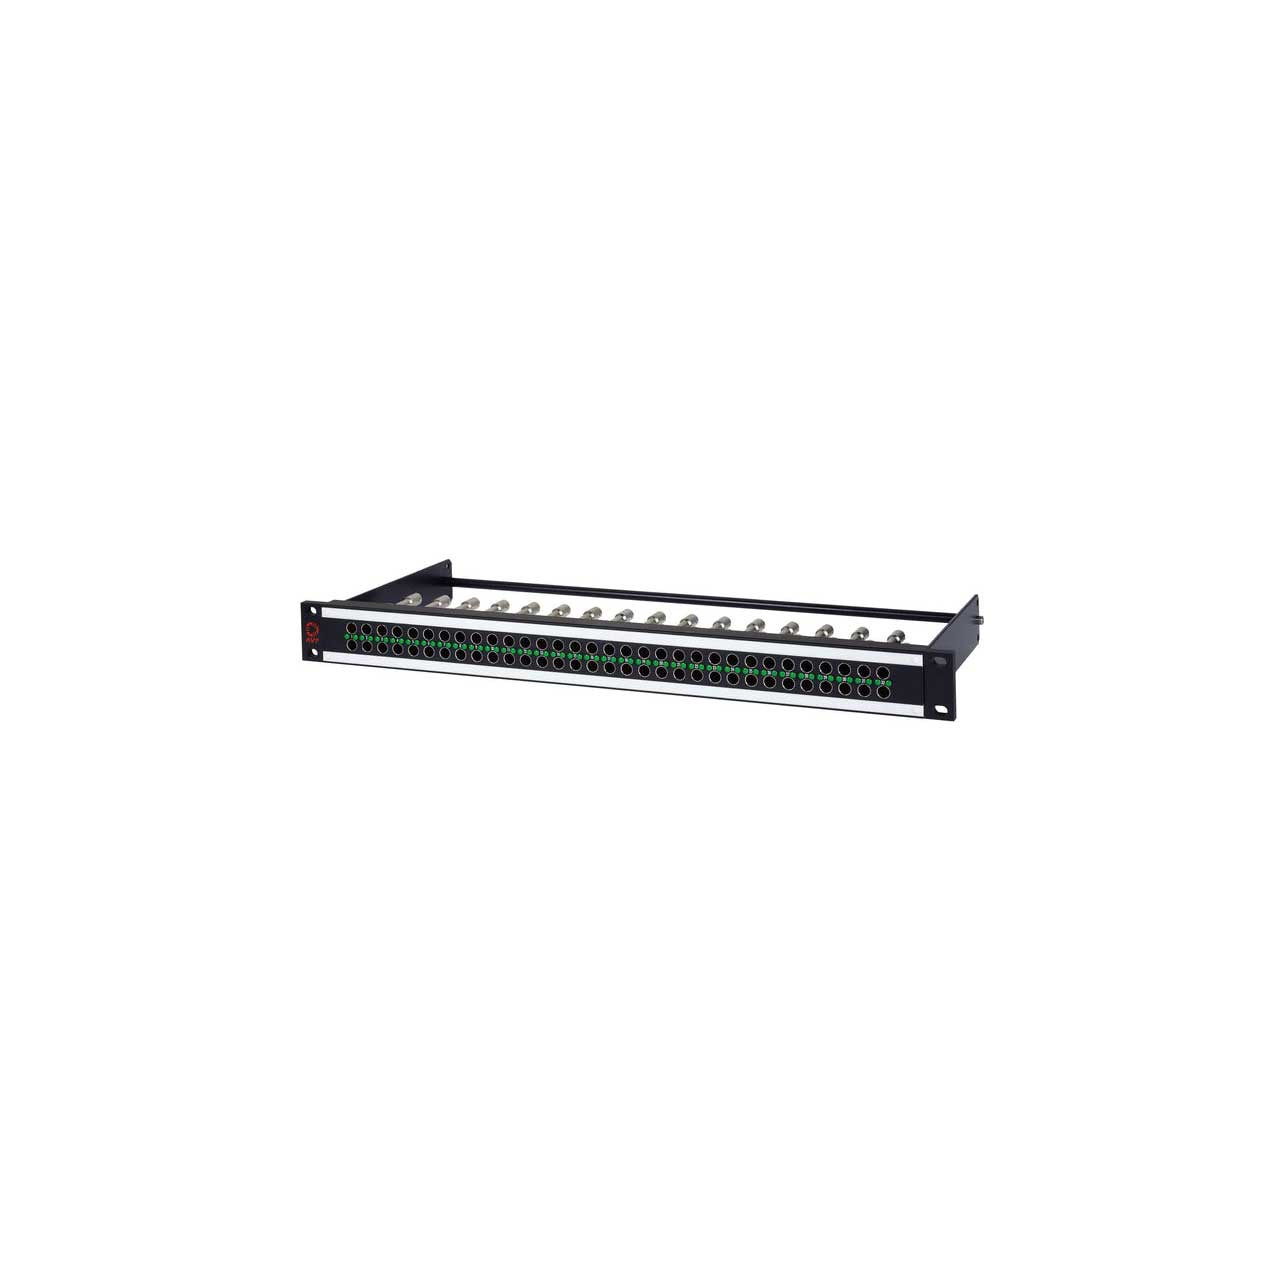 AVP AV-D232E1-AM-B10 1 RU Midsize (Mini-WECO) Video Patch Panel - 2 x 32 - Non-Normaled - Non-Terminating w/ Cable Bar AV-D232E1-AM-B10